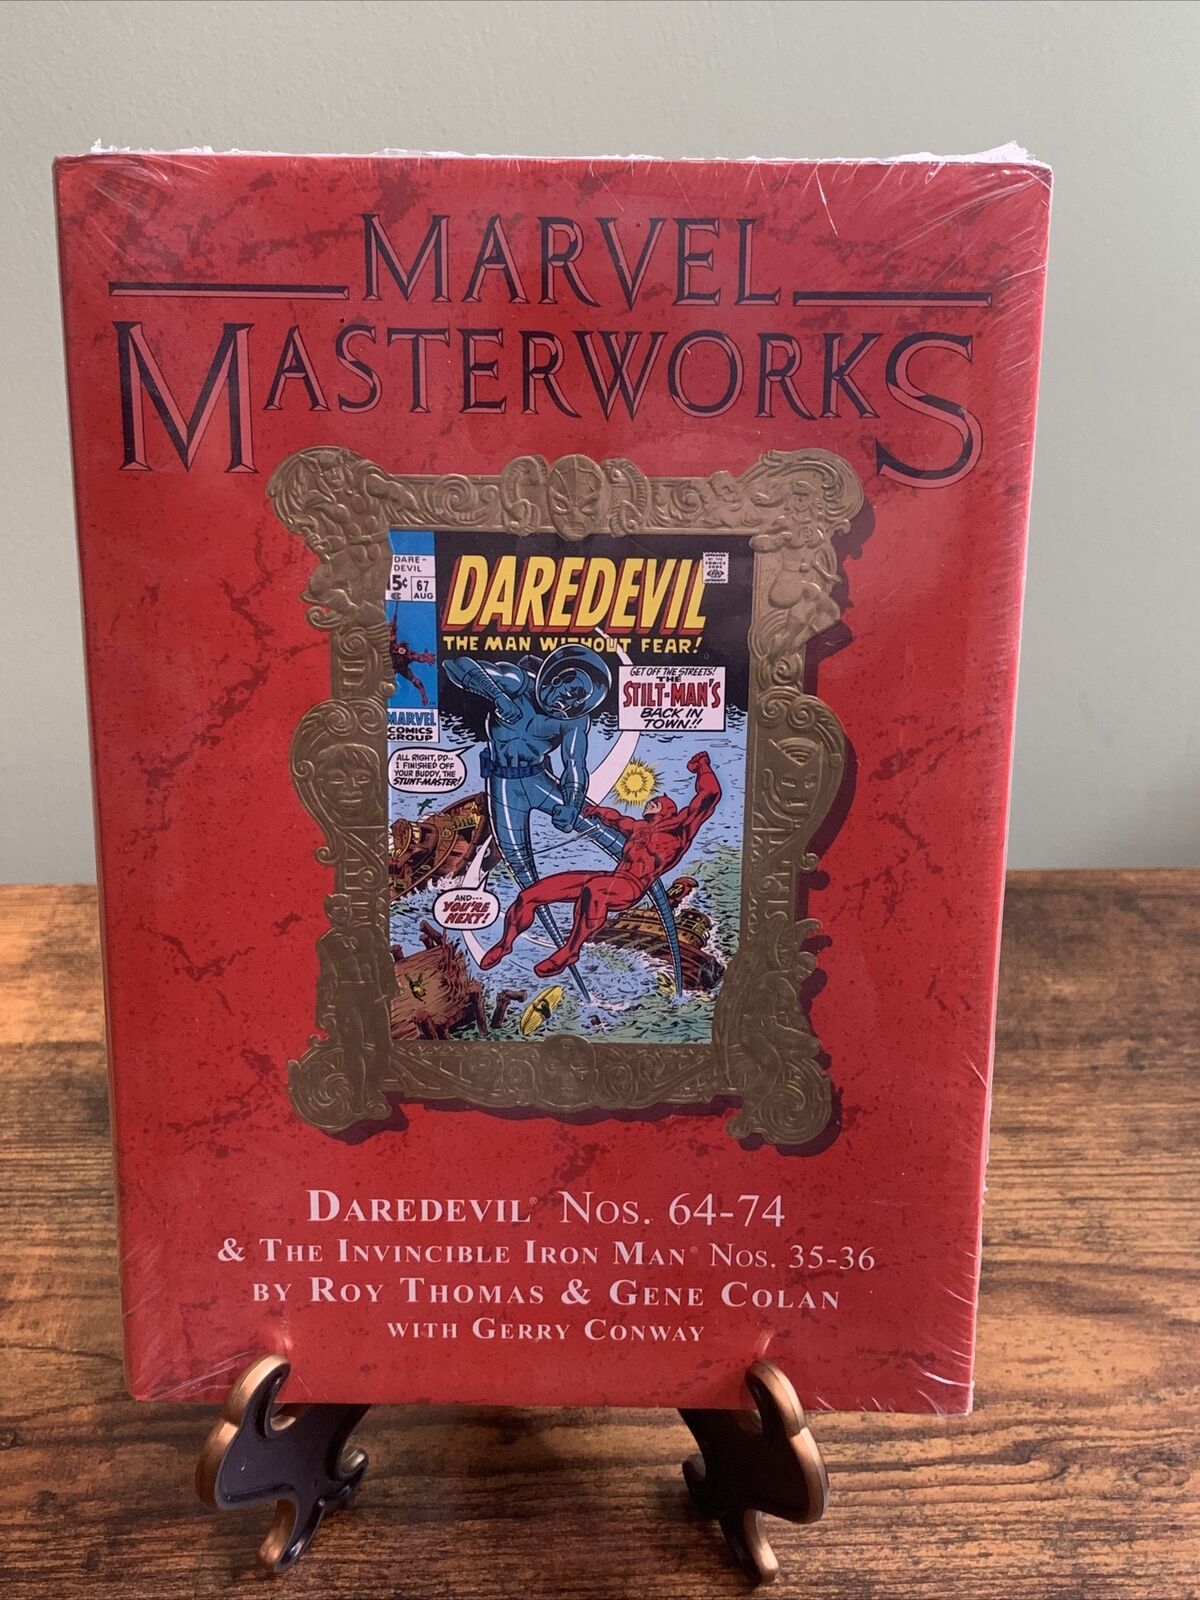 New Marvel Masterworks Volume 198 Daredevil Volume 7 Hardcover Variant Sealed